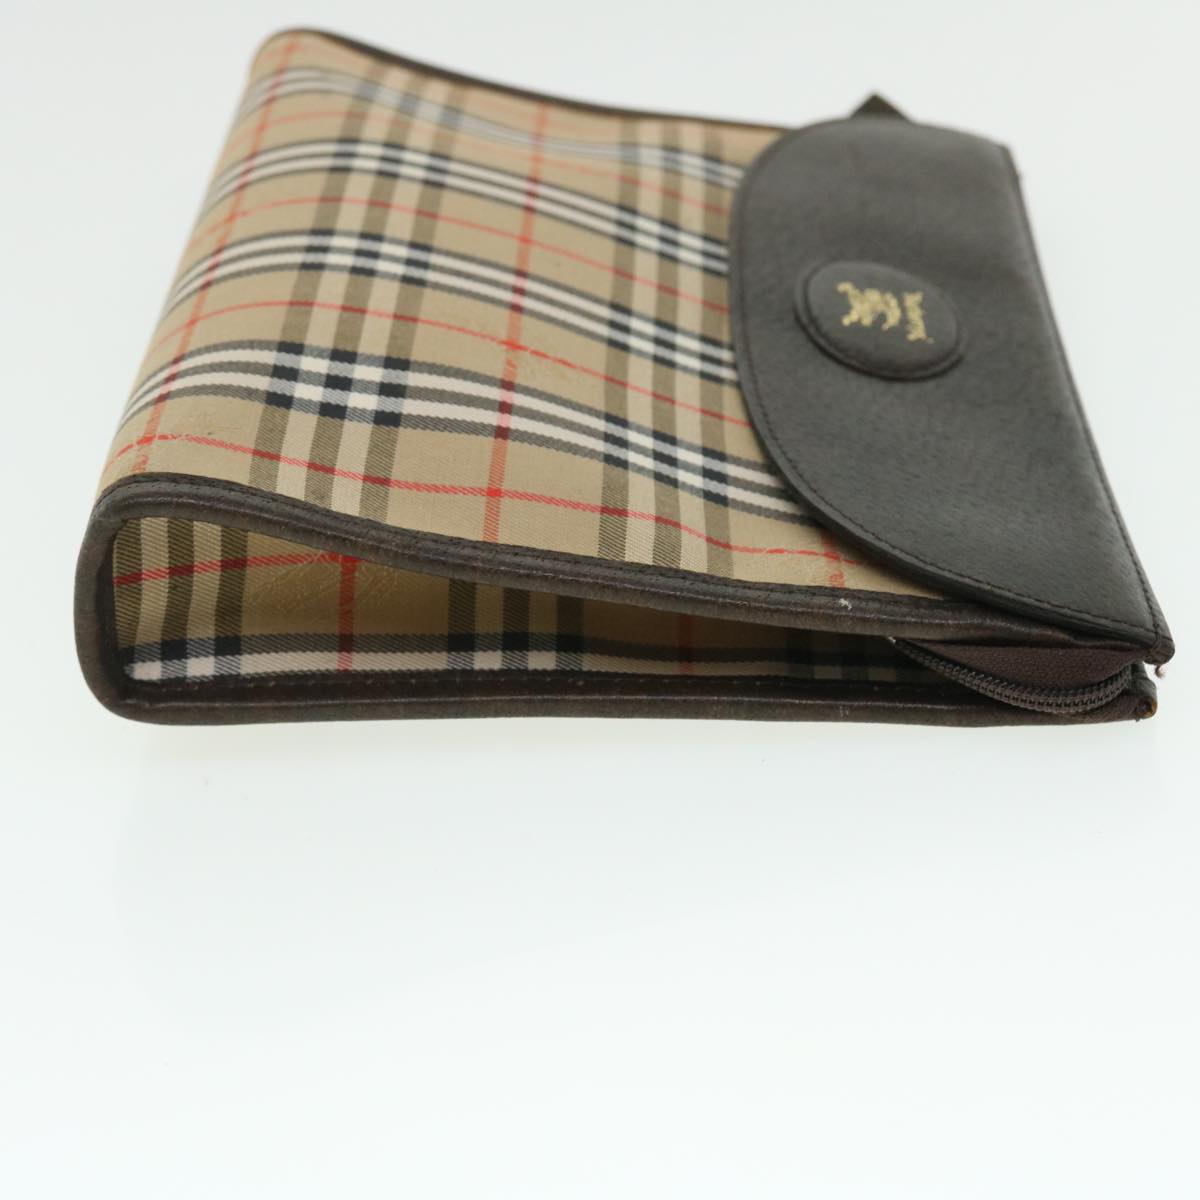 Burberrys Nova Check Clutch Bag Canvas Leather Beige Brown Auth 51662